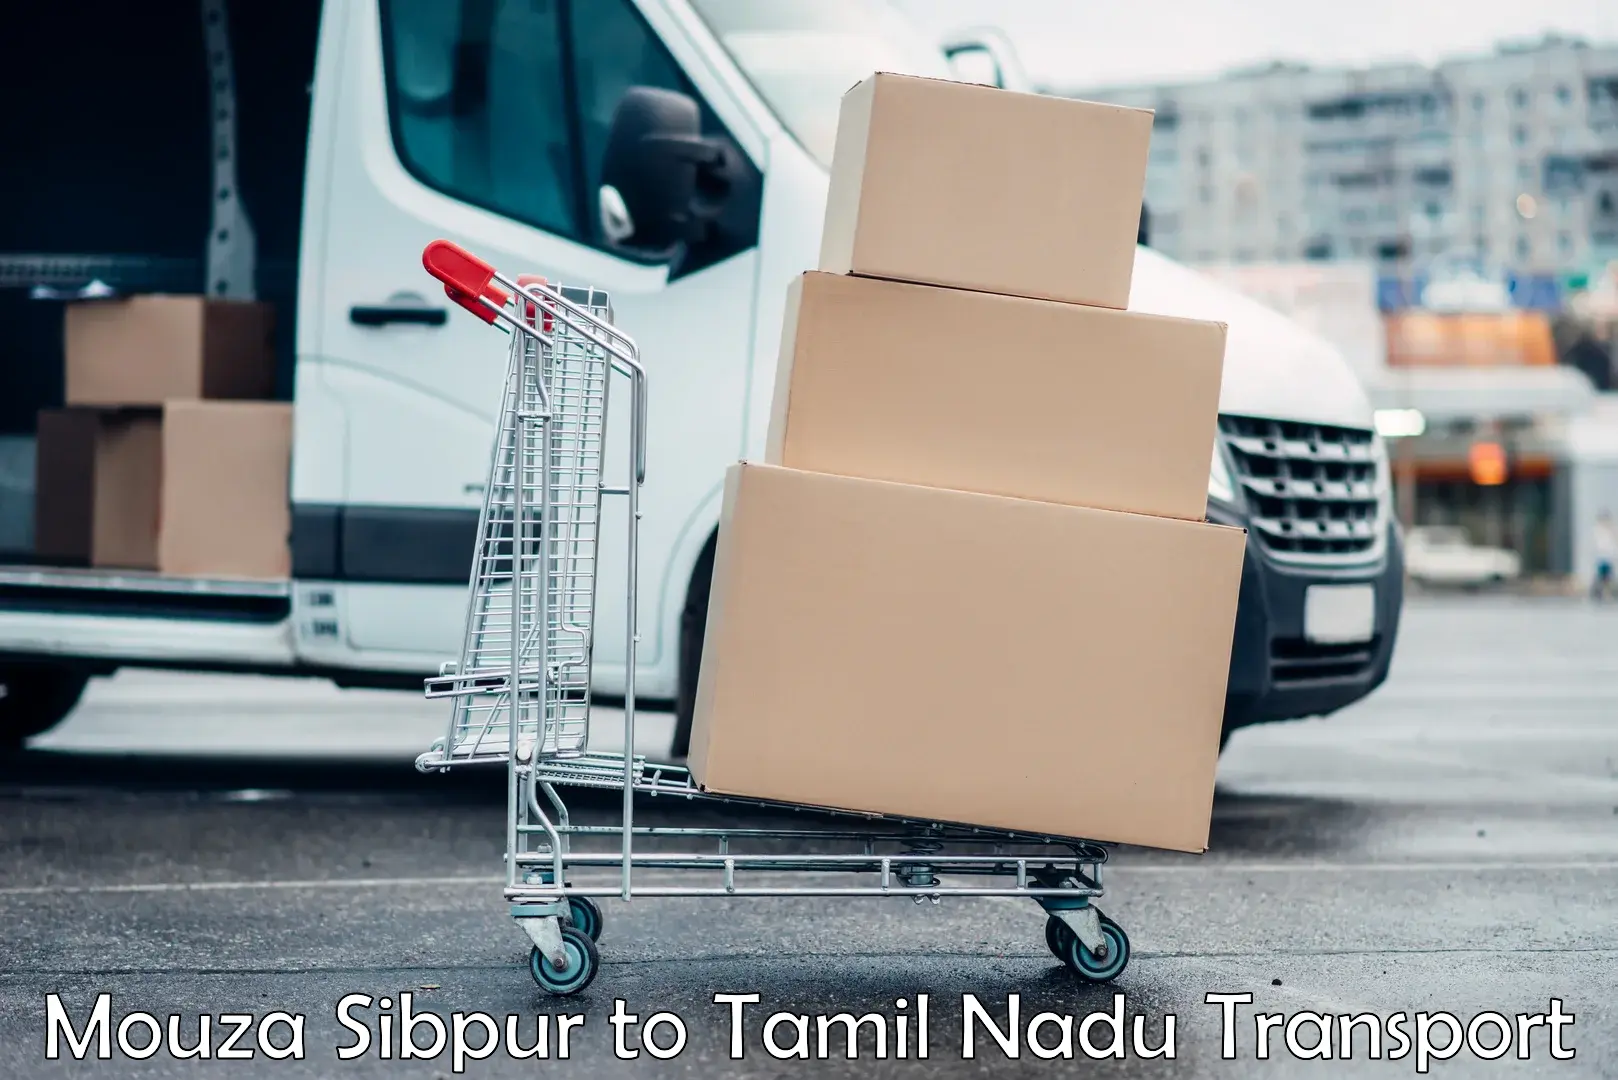 Domestic goods transportation services Mouza Sibpur to Ennore Port Chennai